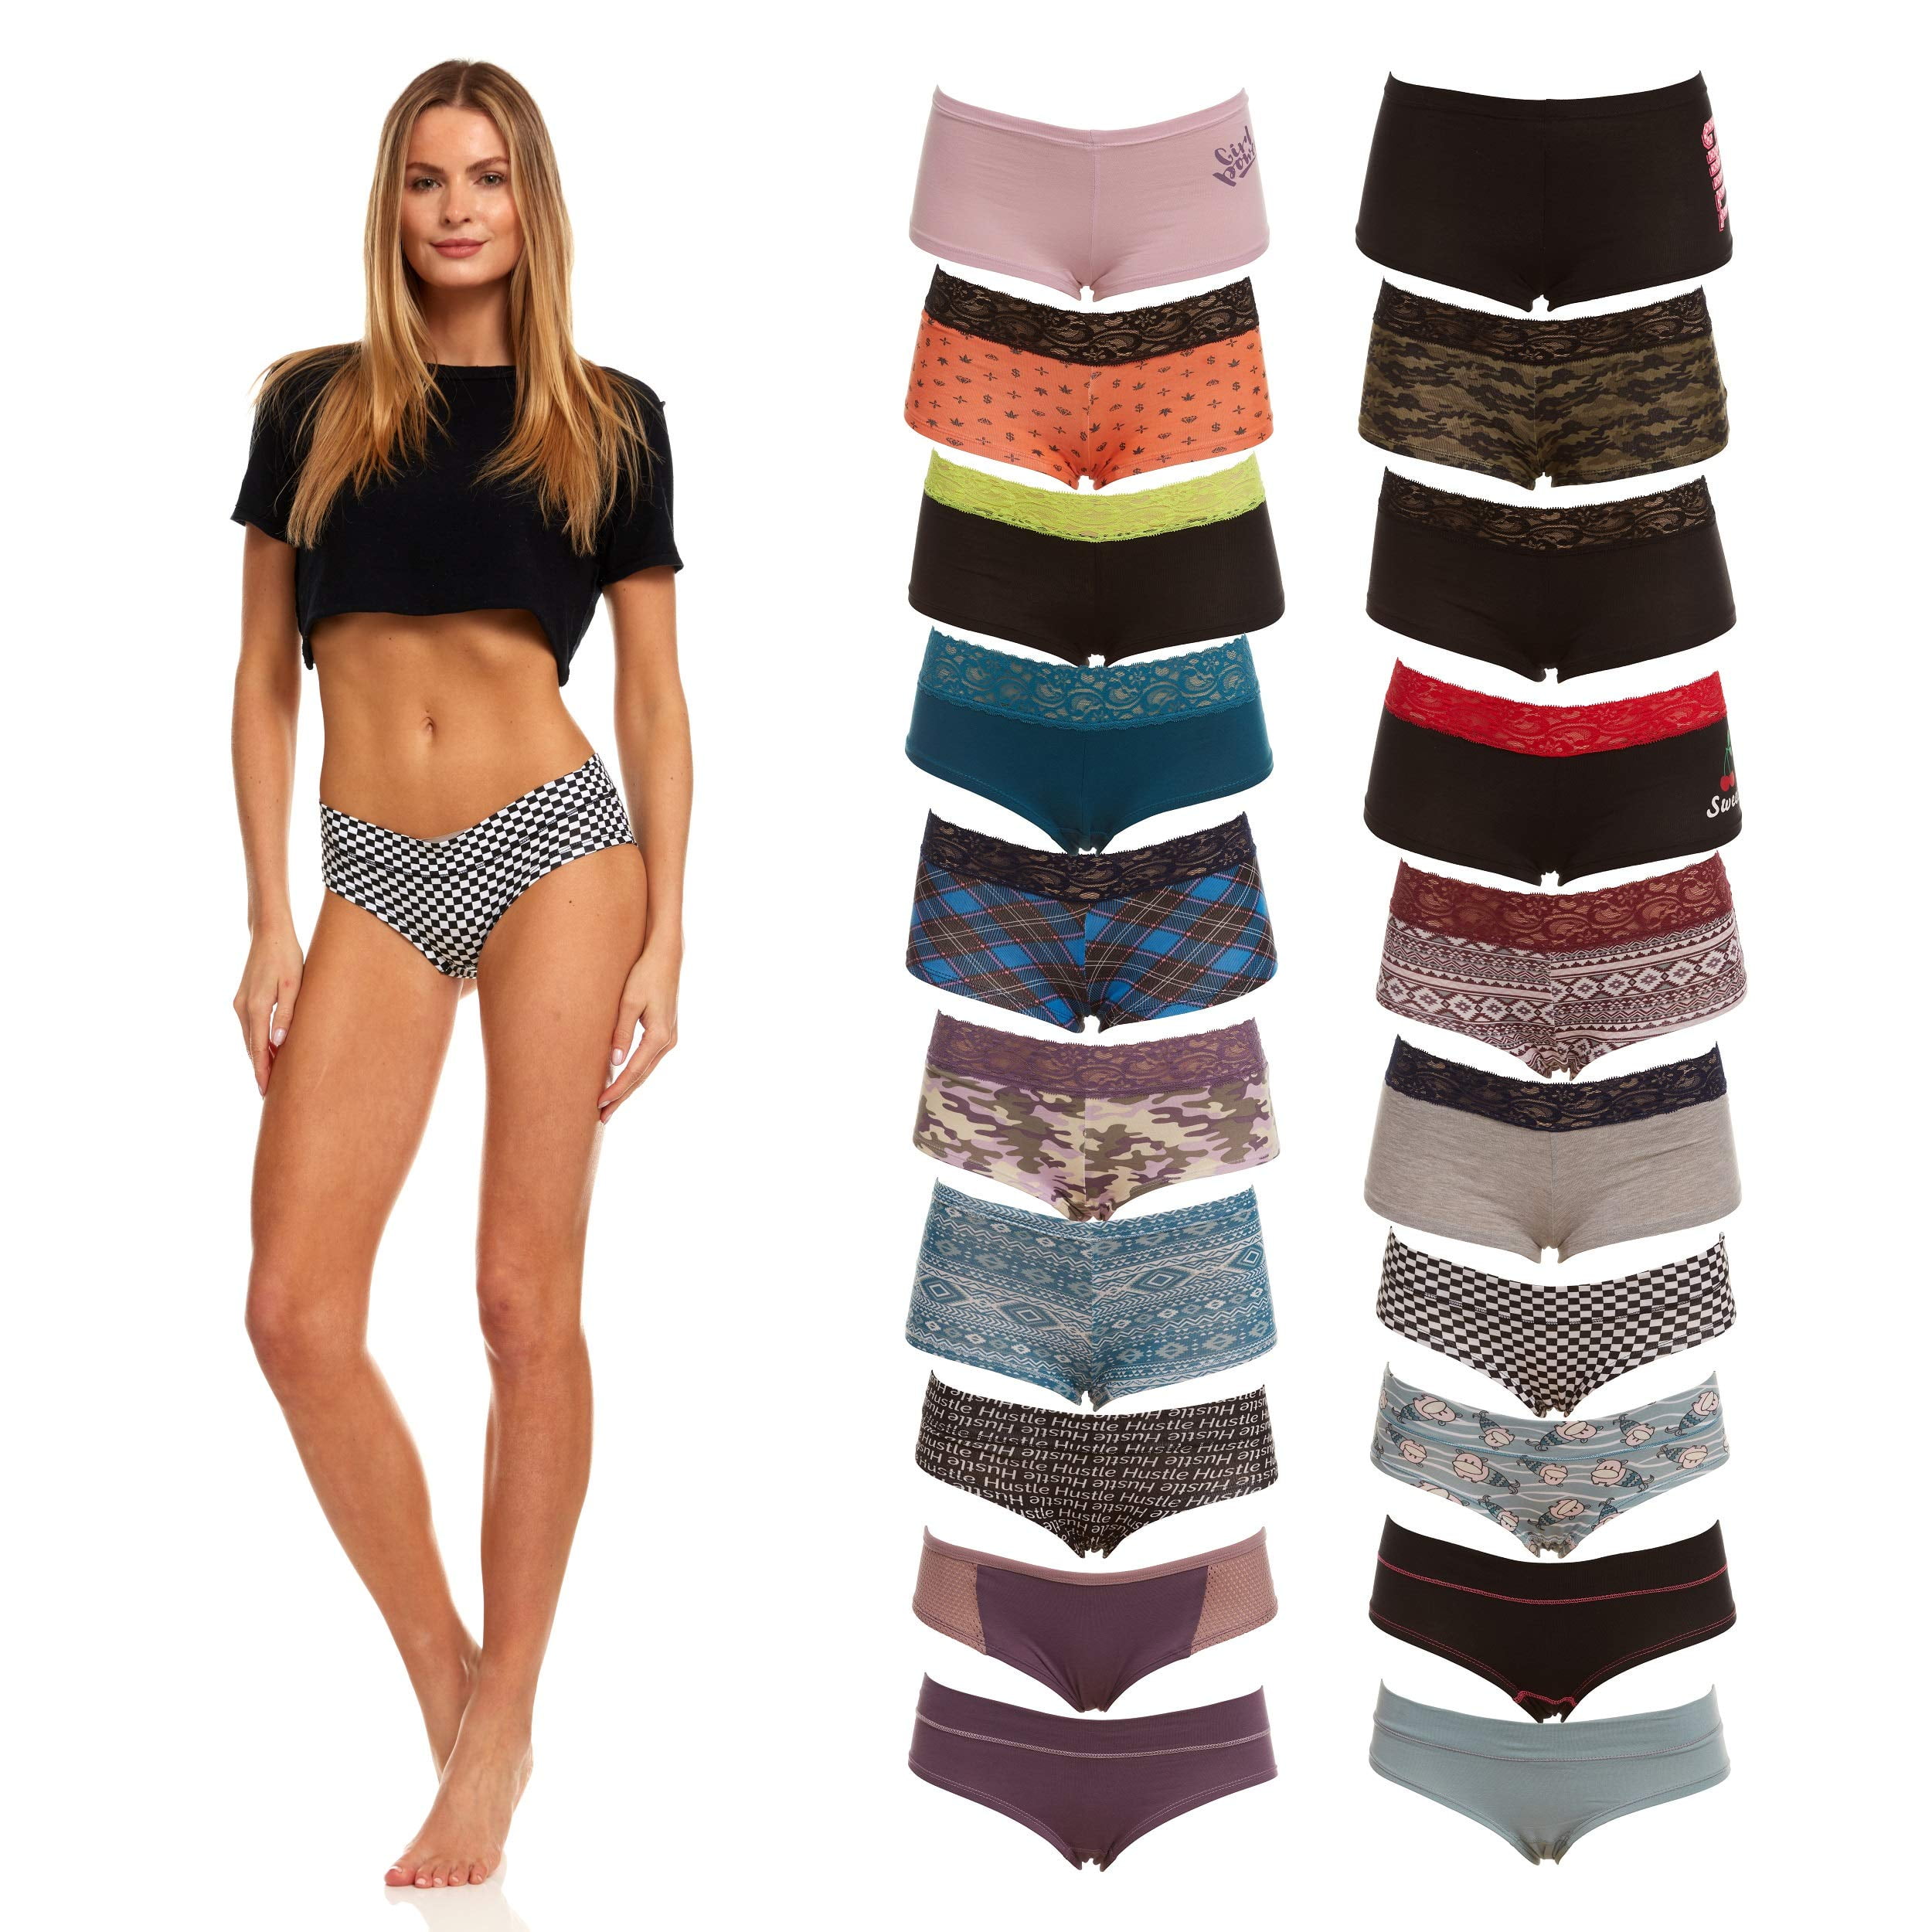 SOCKS'NBULK Womens Bulk Underwear Panties - 95% Cotton - Mixed Assorted  Prints Packs, Seamless, Lay, Thongs, Boy Shorts, Patterns (60 Pack  Assorted